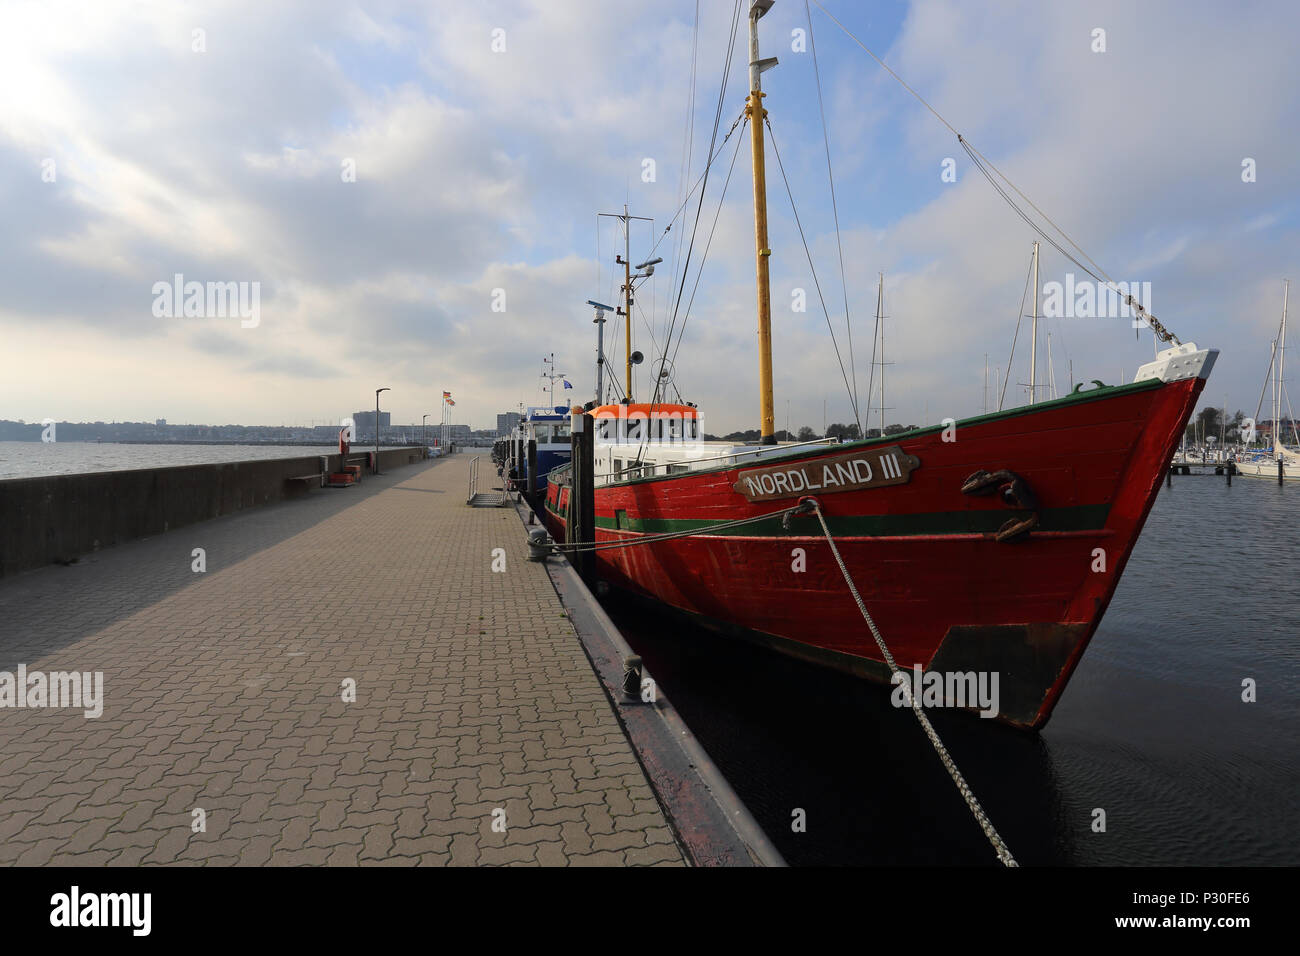 Strande, Germany, the MS Nordland III at the port mole Stock Photo